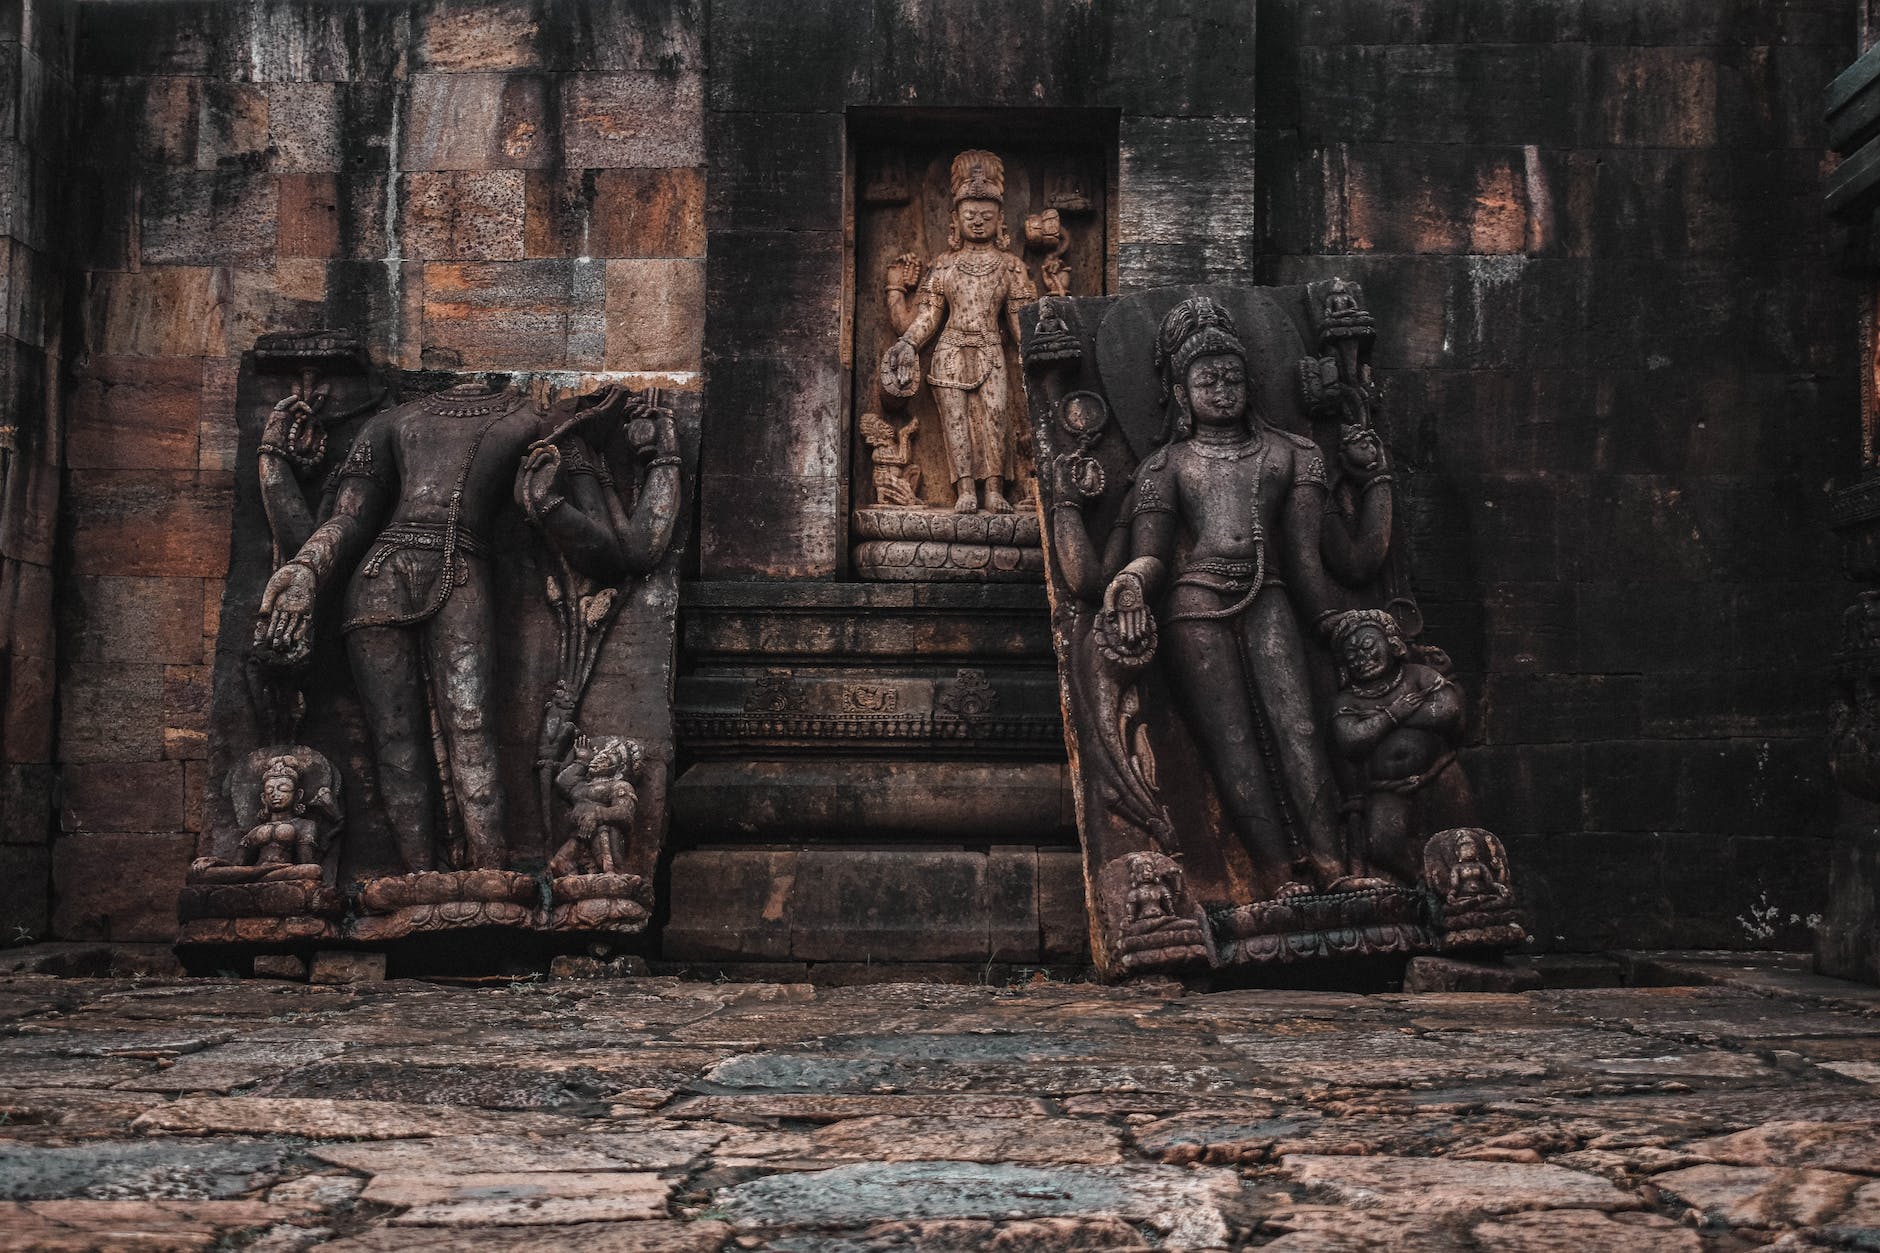 sculptures in ancient temple